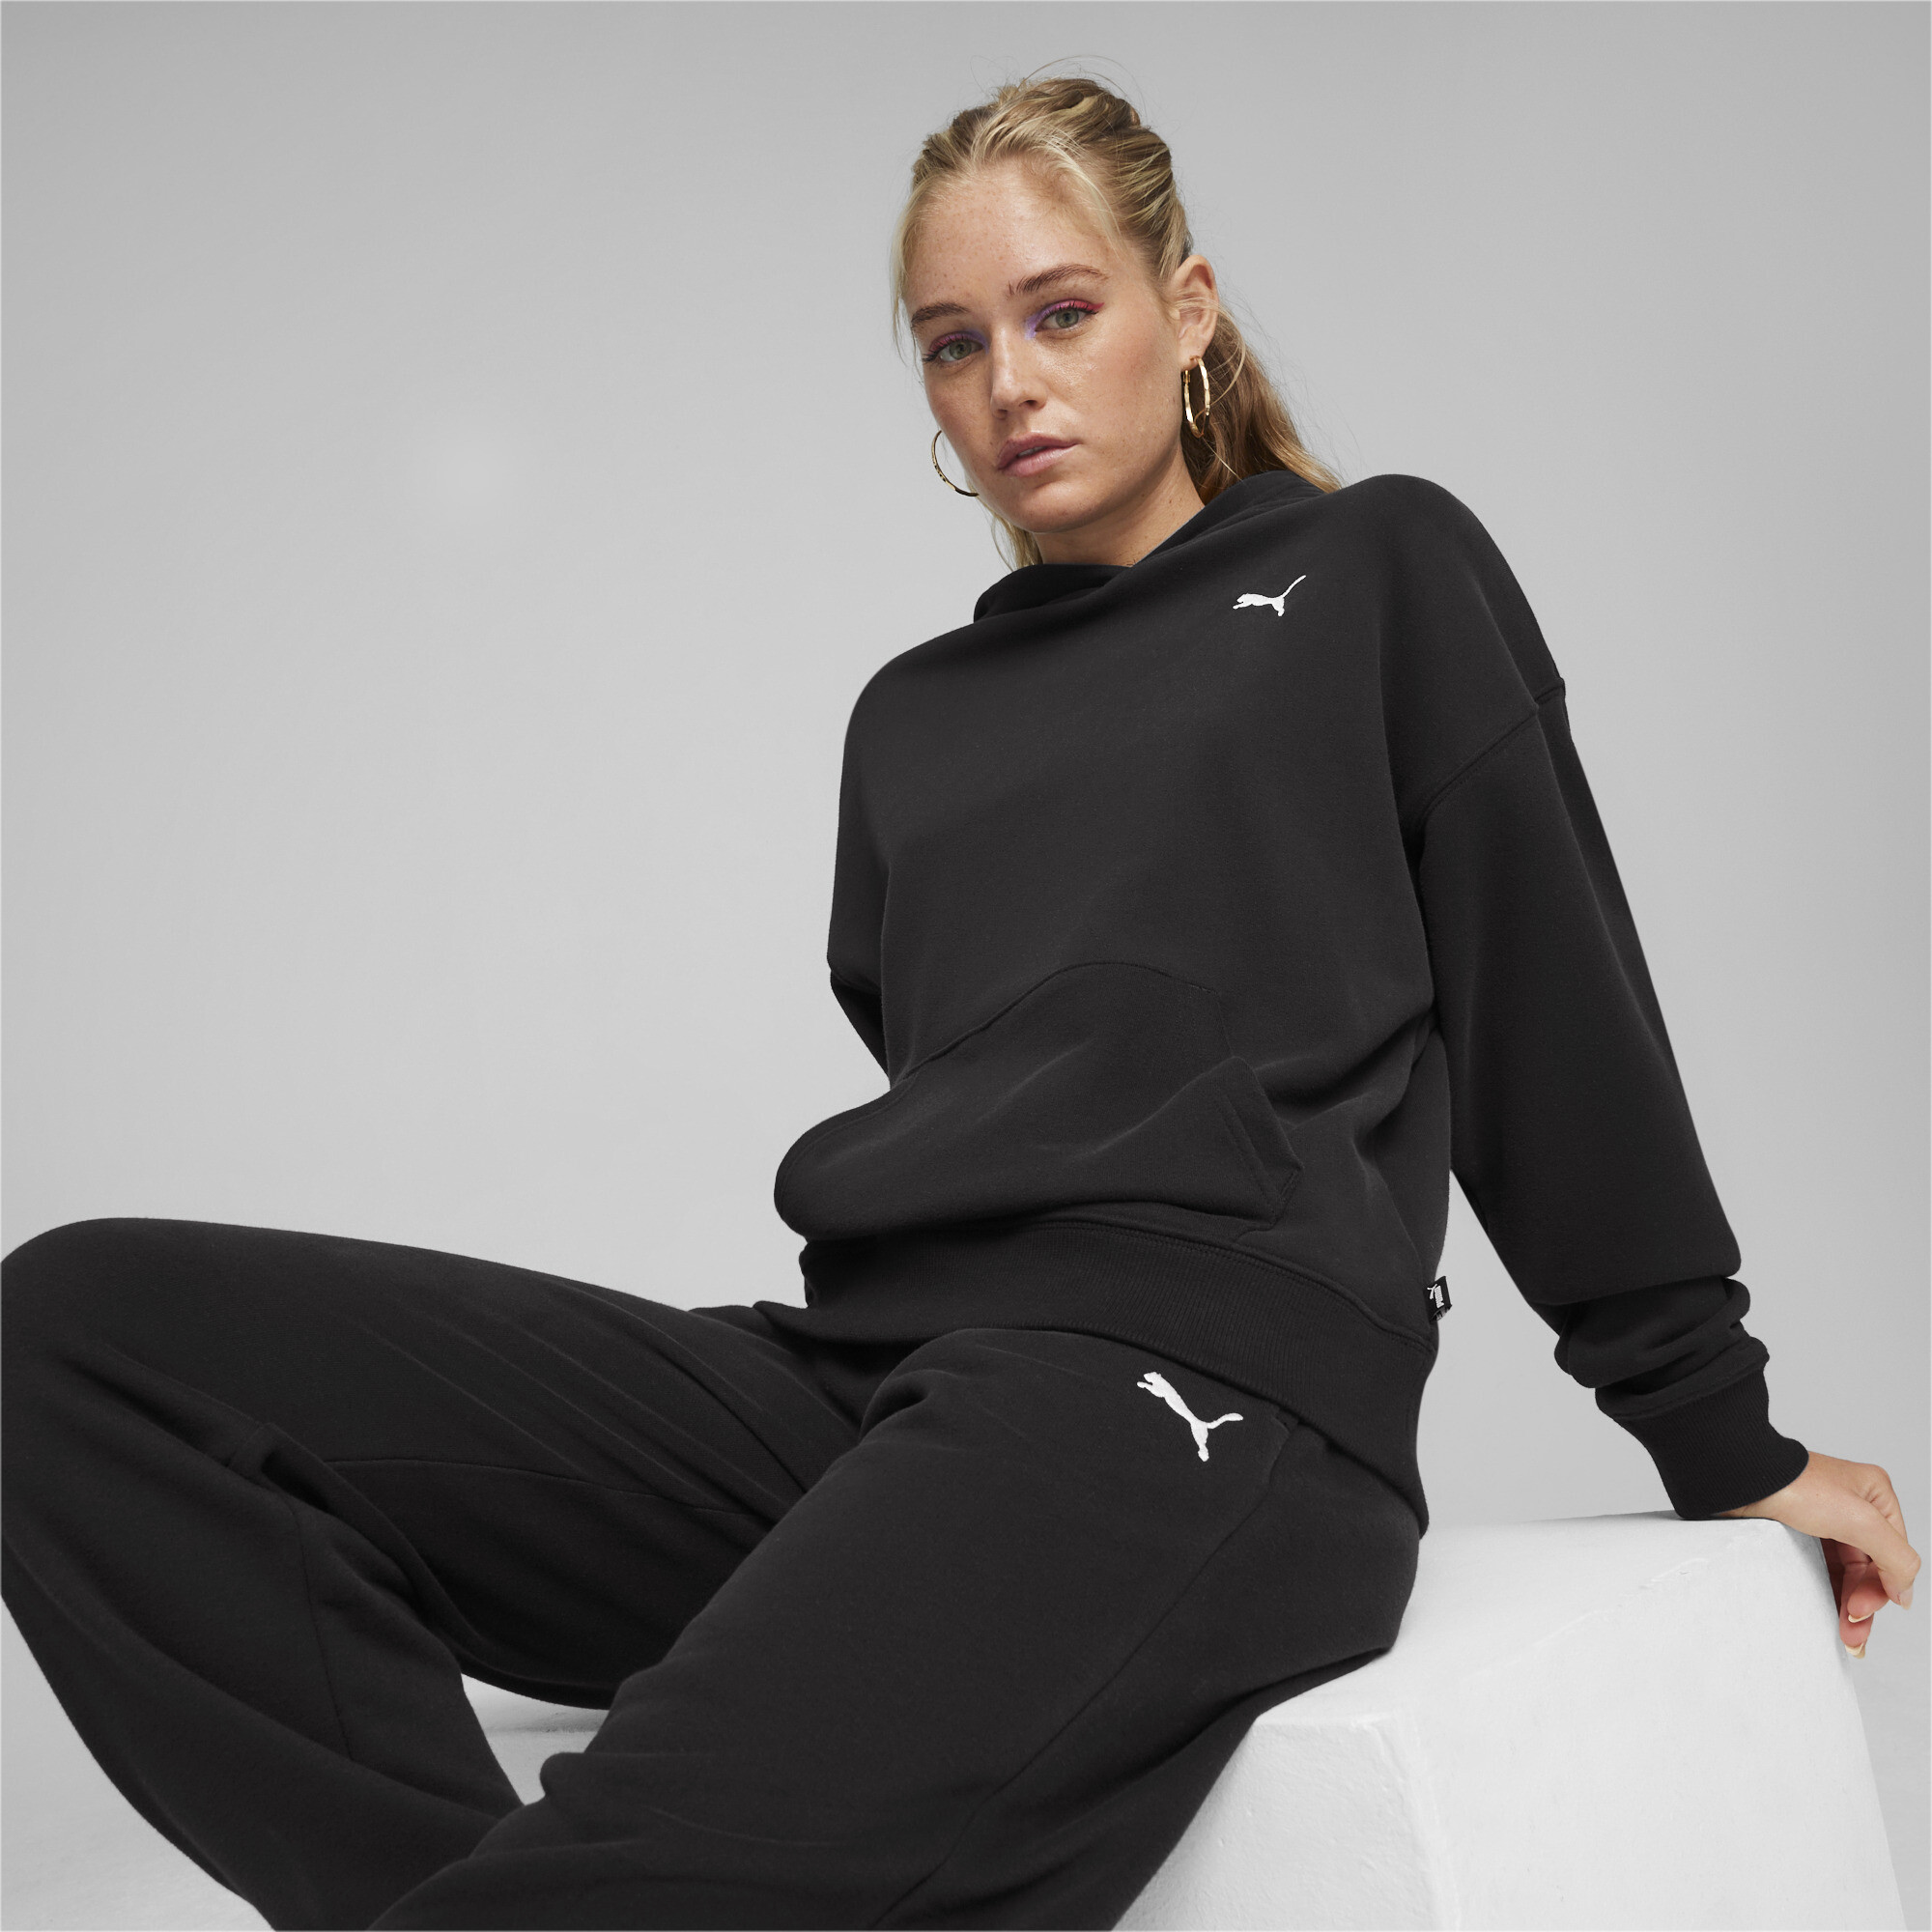 Women's Puma Loungewear's Track Suit, Black, Size XS, Clothing